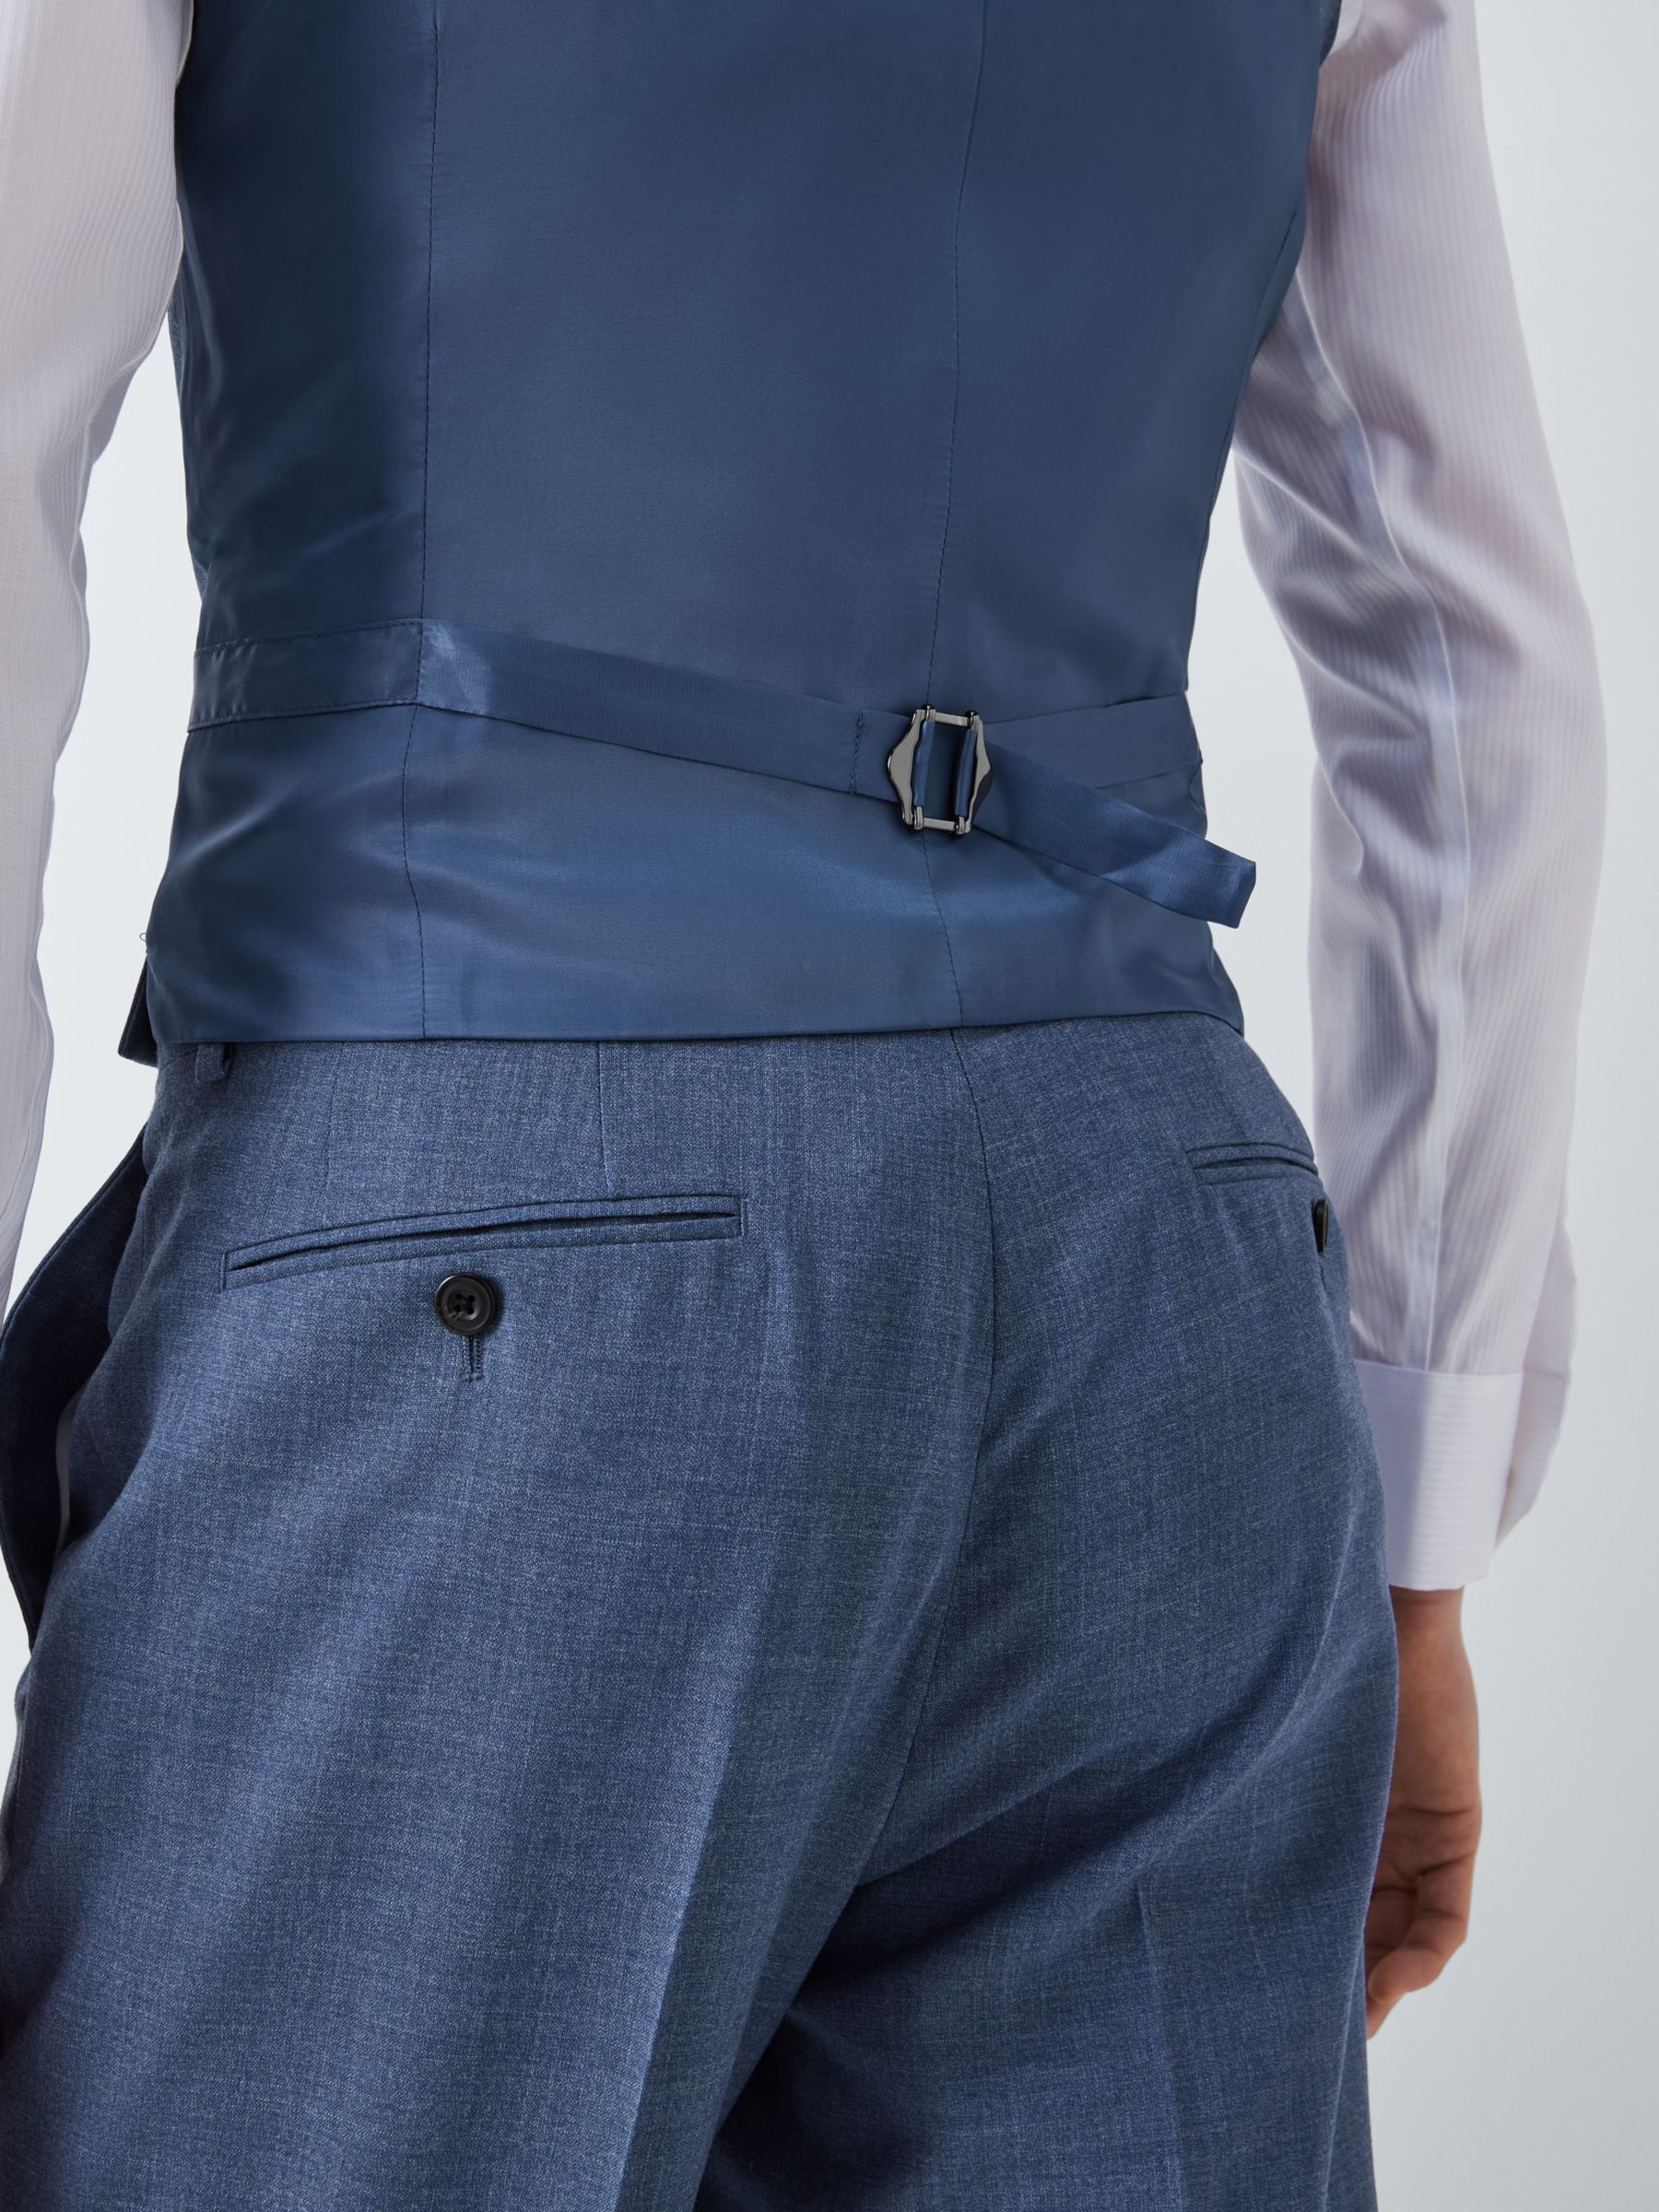 John Lewis Warwick Wool Melange Regular Fit Waistcoat, Mid Blue, 46R